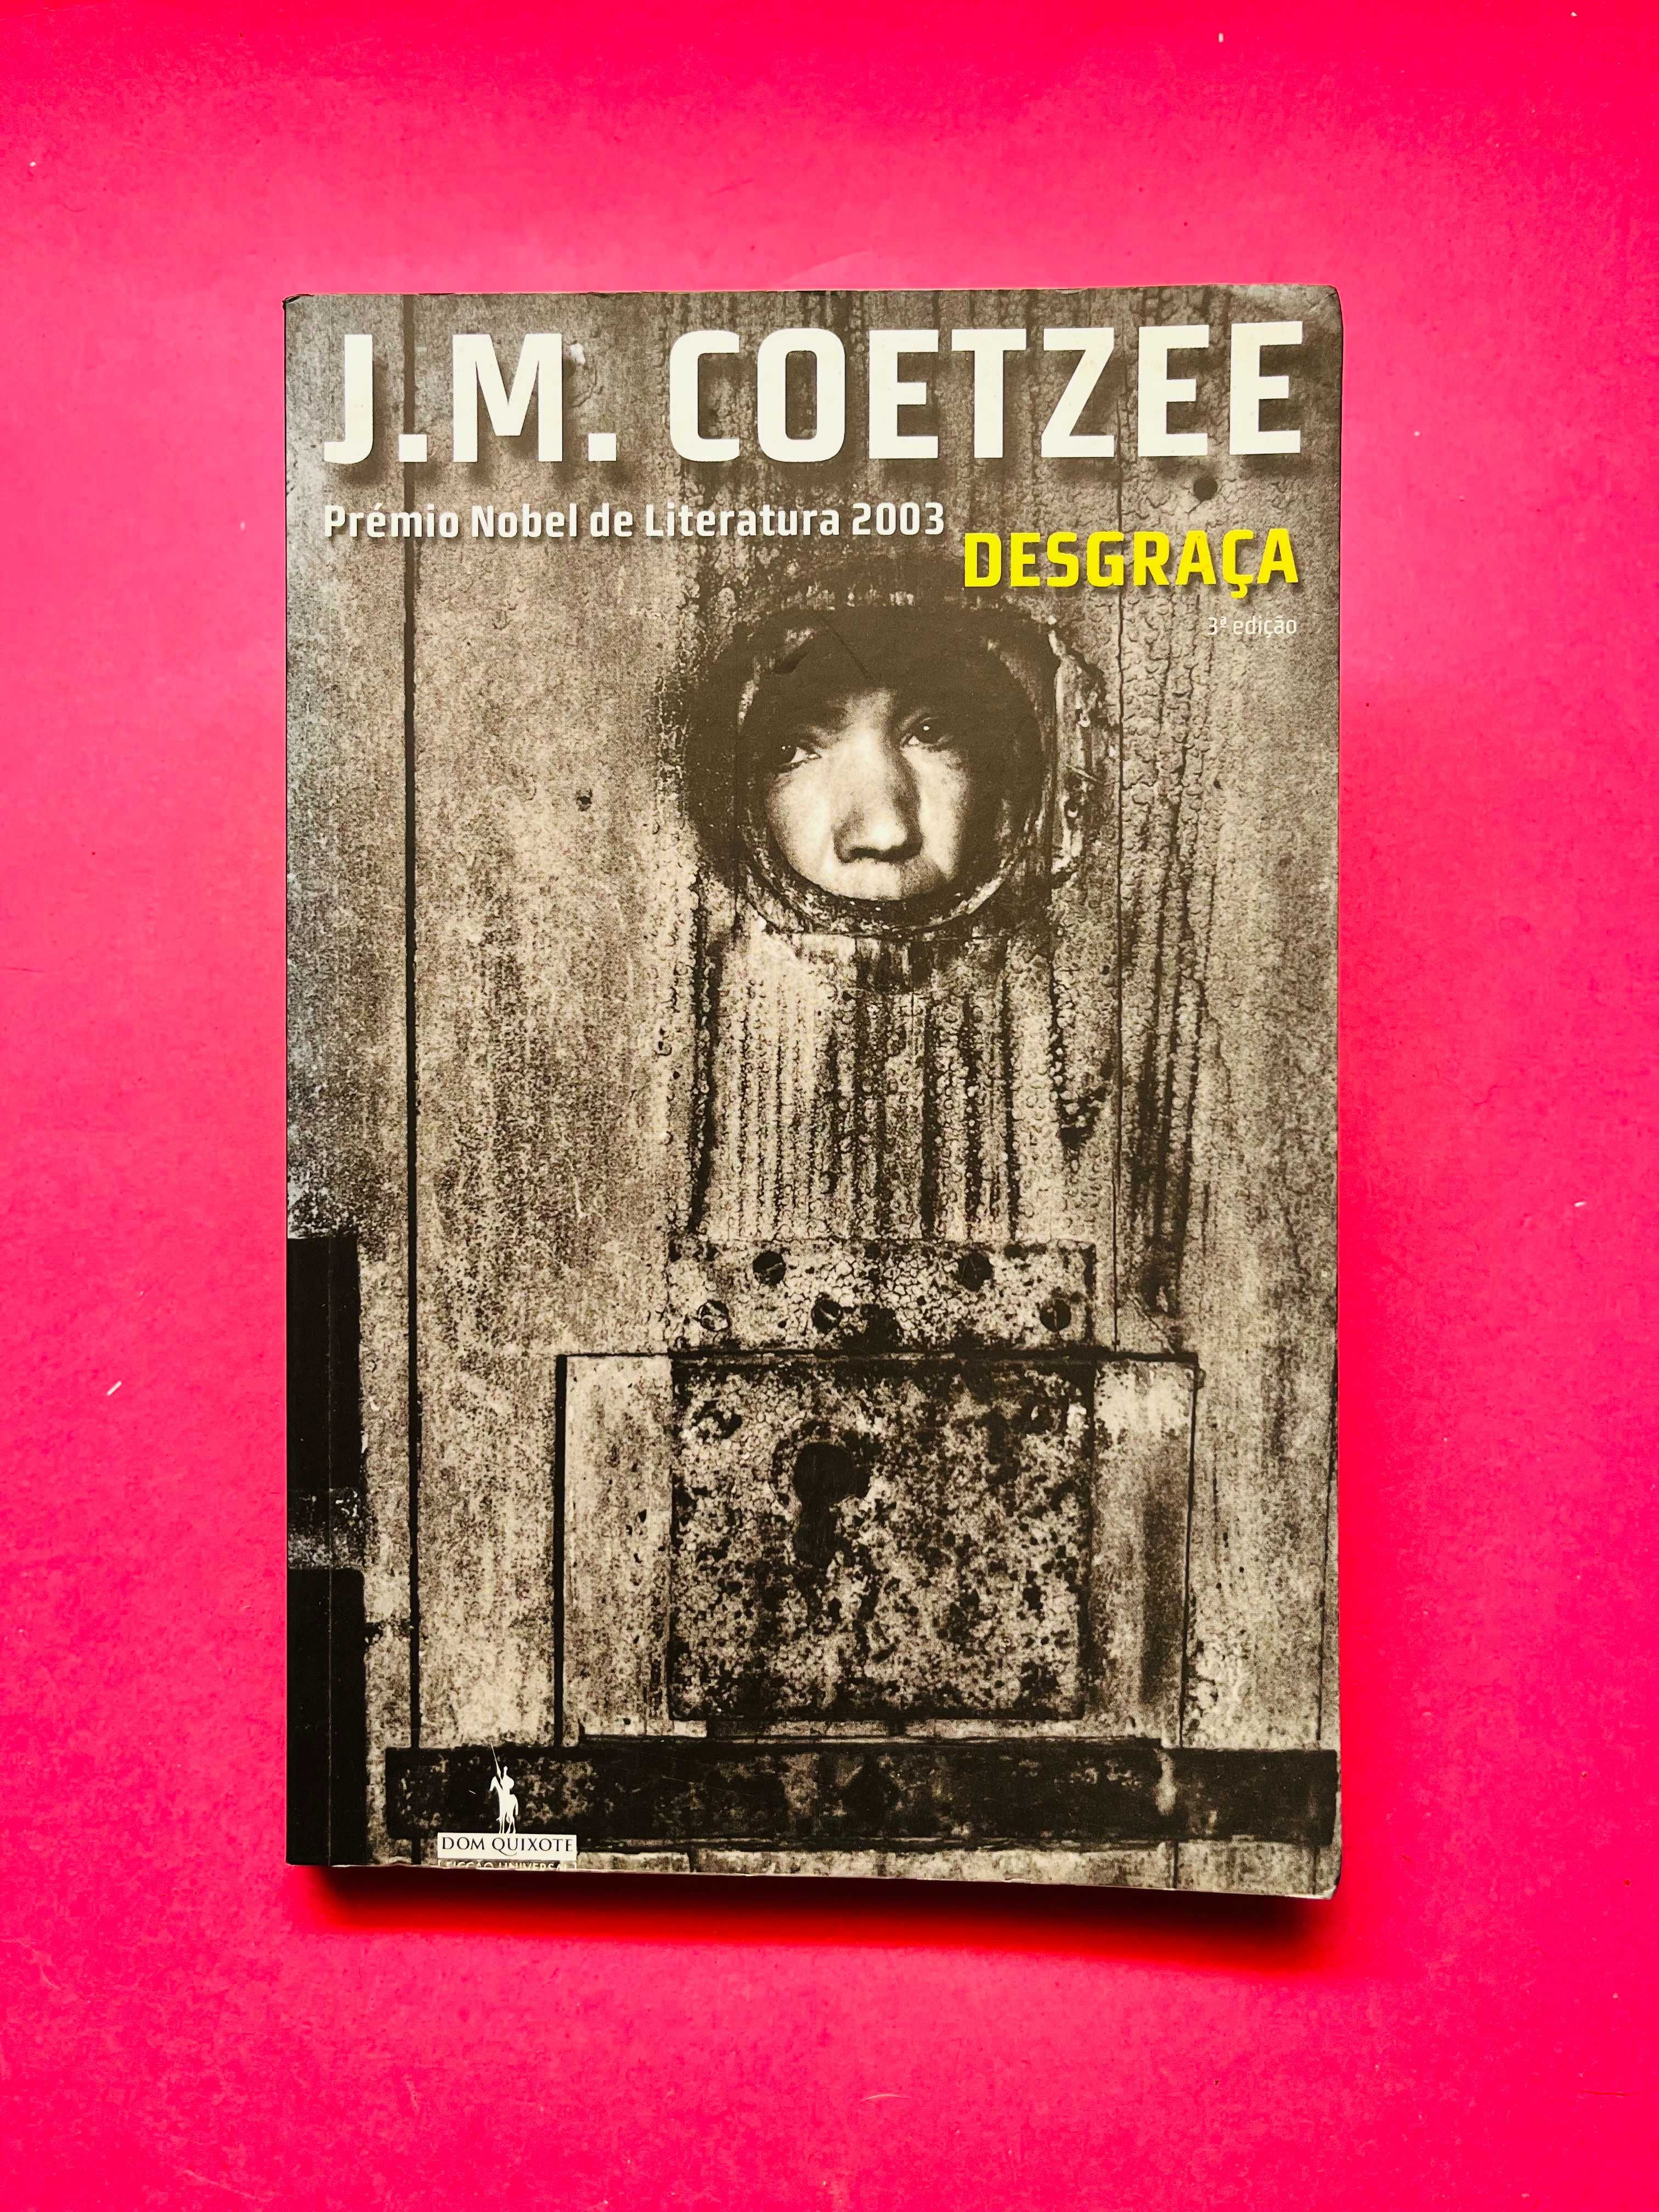 J.M. Coetzee - Desgraça